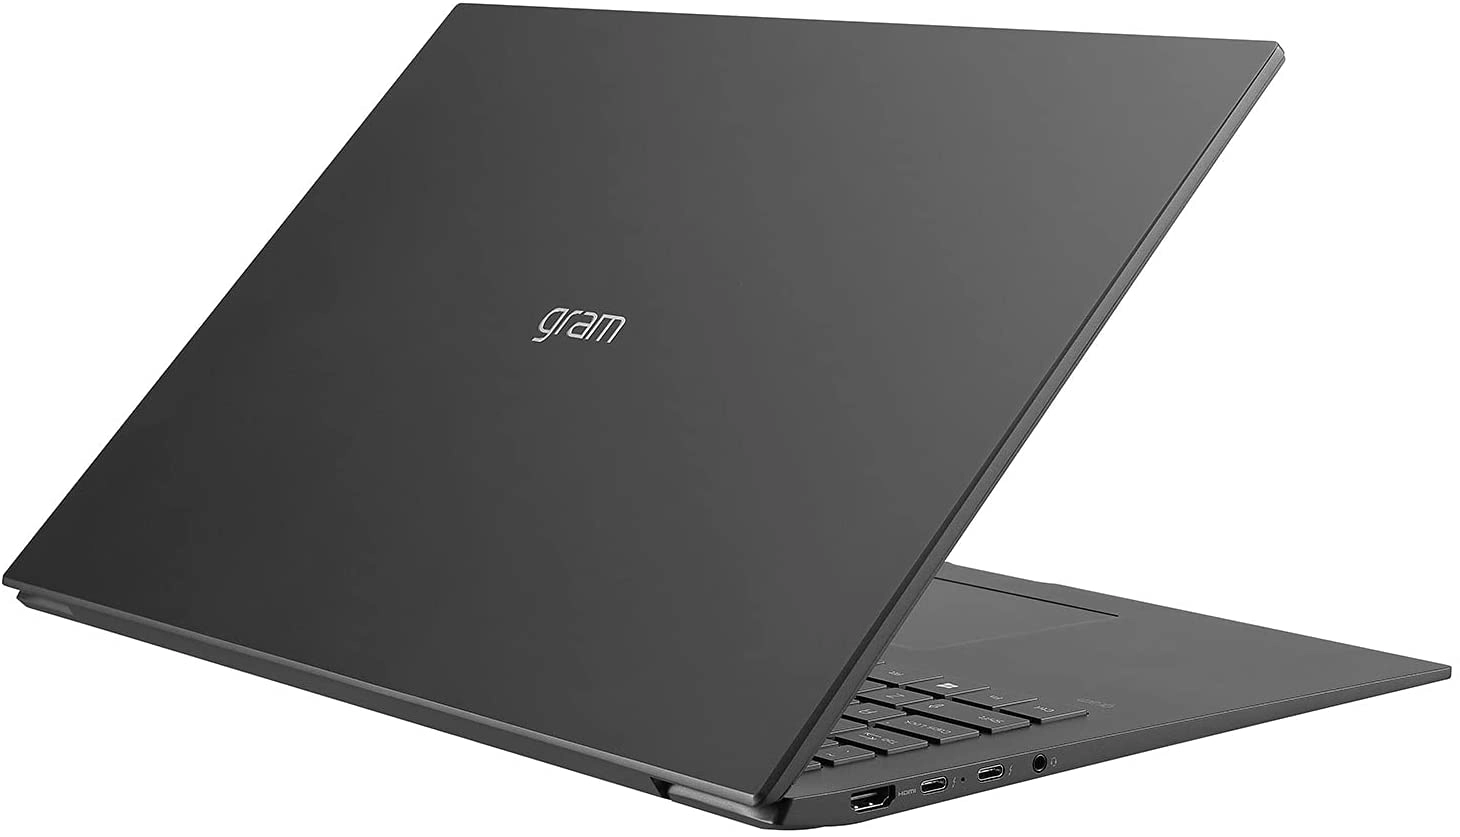 LG 17Z90P-G.AA78B laptop image